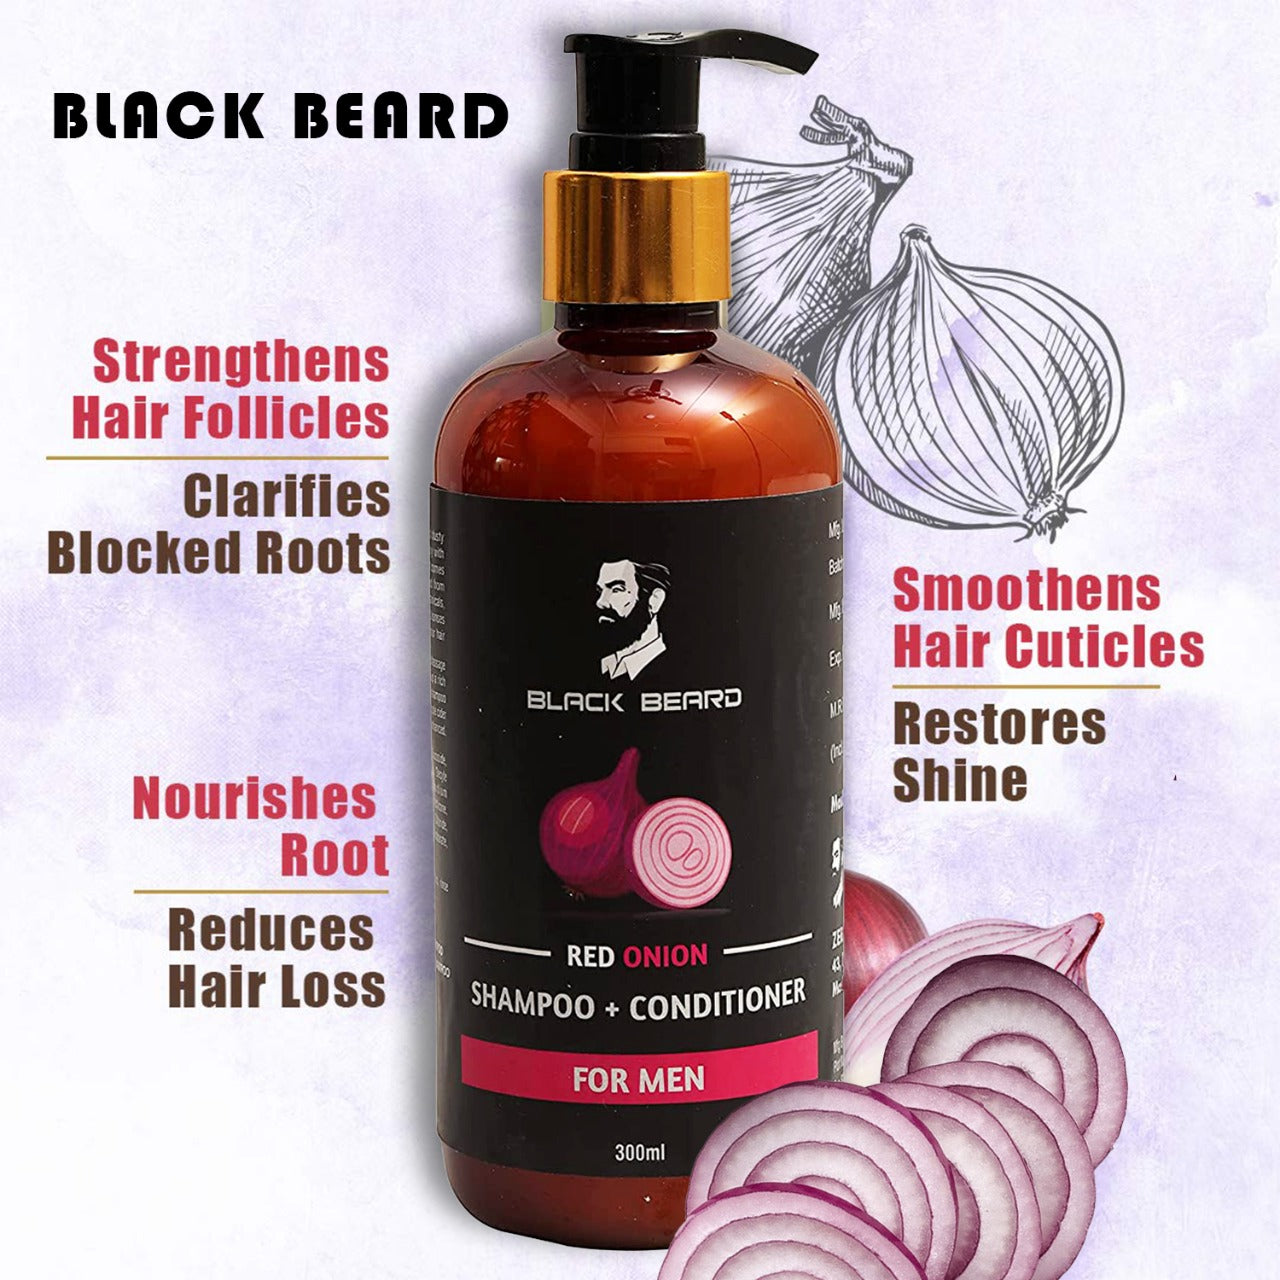 
                  
                    Black Beard Red Onion Shampoo and Conditioner (300ml)
                  
                